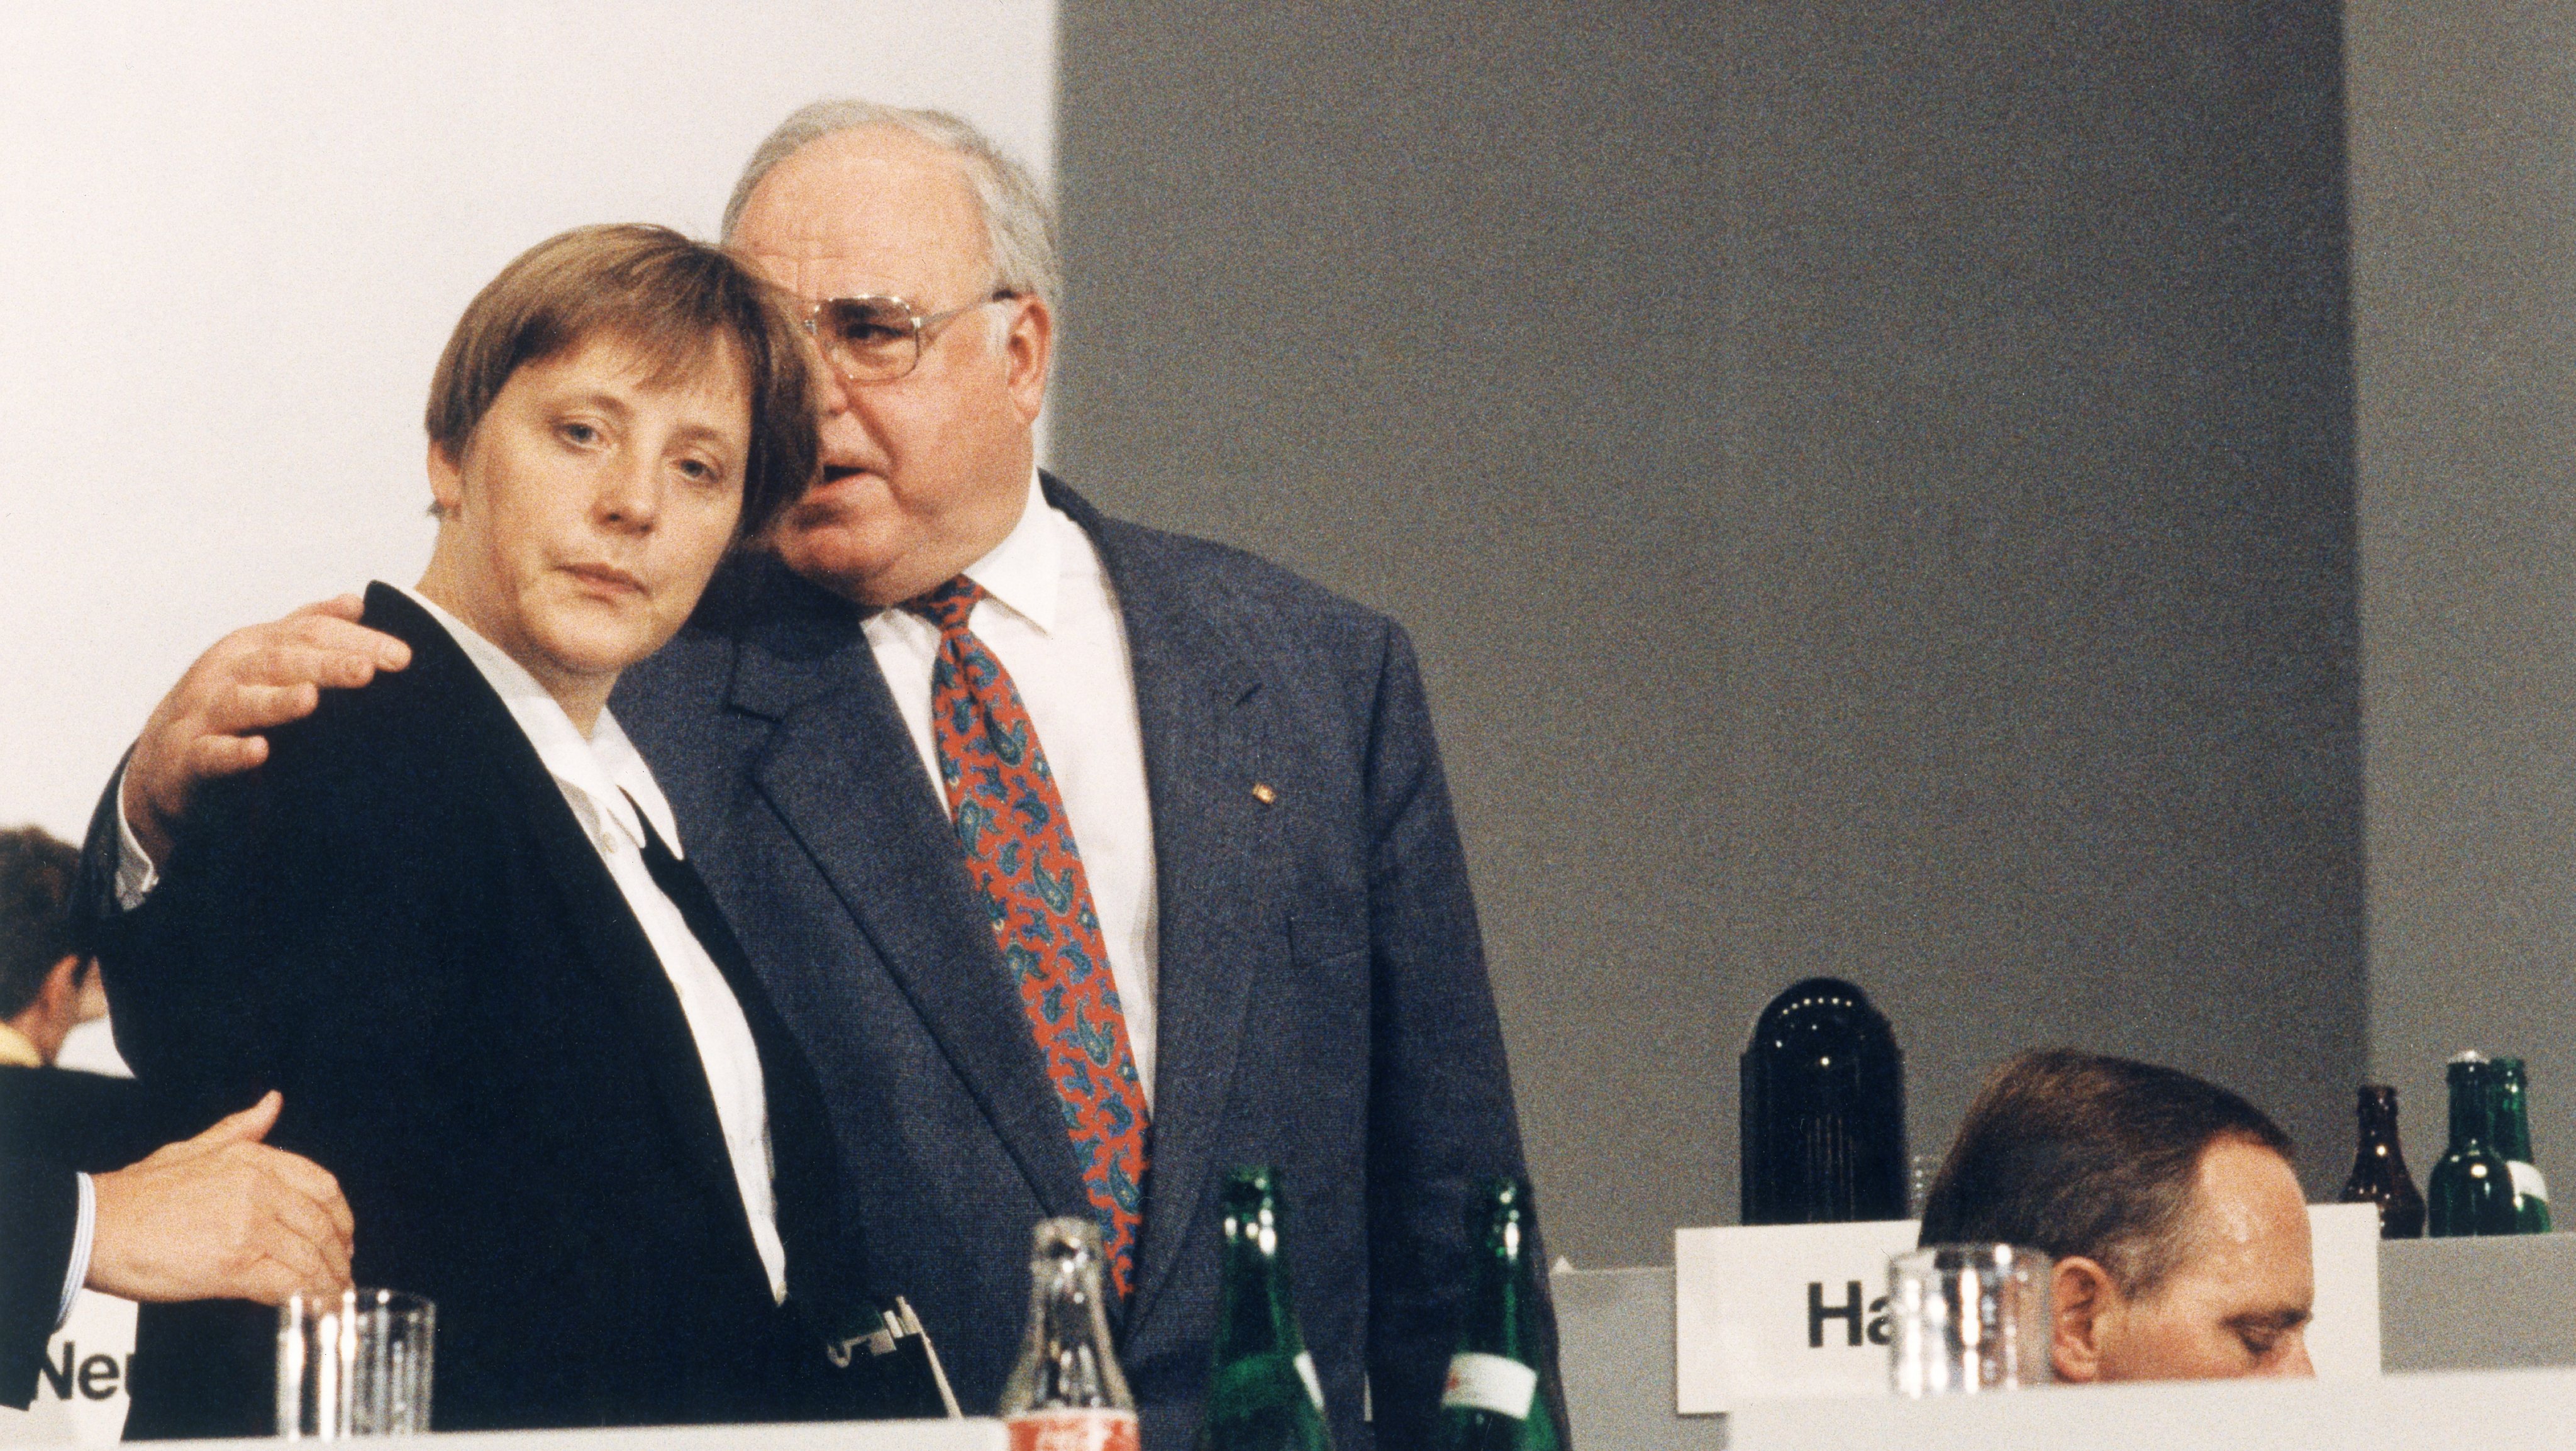 Kohl , Helmut *03.04.1930-politician, CDU; Germany, Federal Chancellor 1982-1998, with Angela Merkel, march 1993